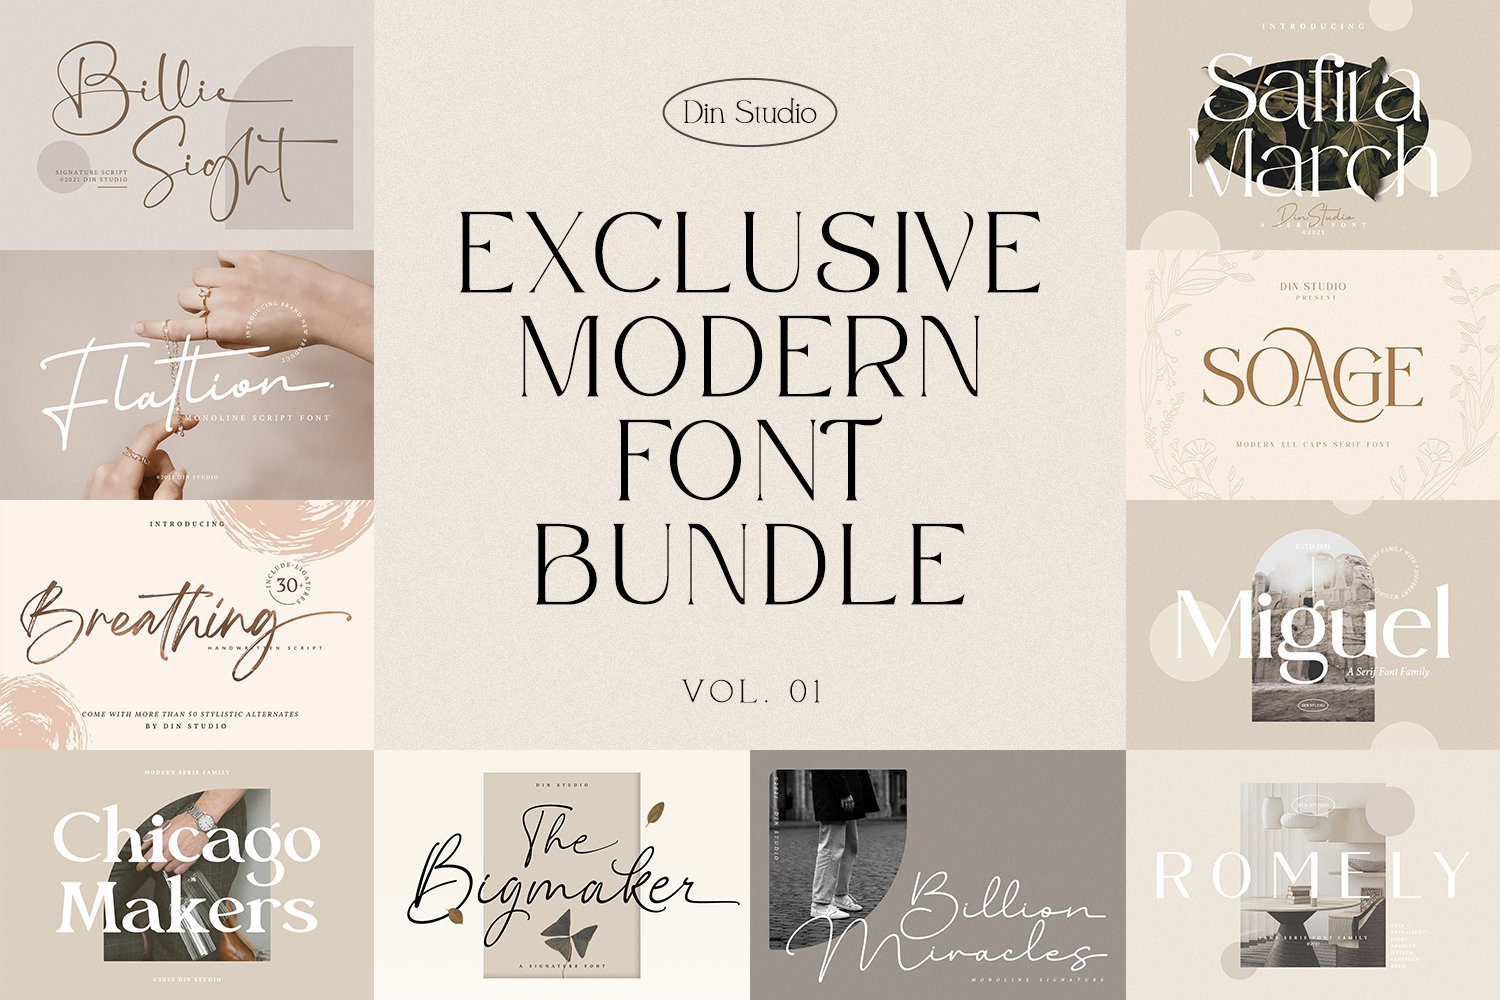 SALE - Exclusive Modern Font Bundle cover image.